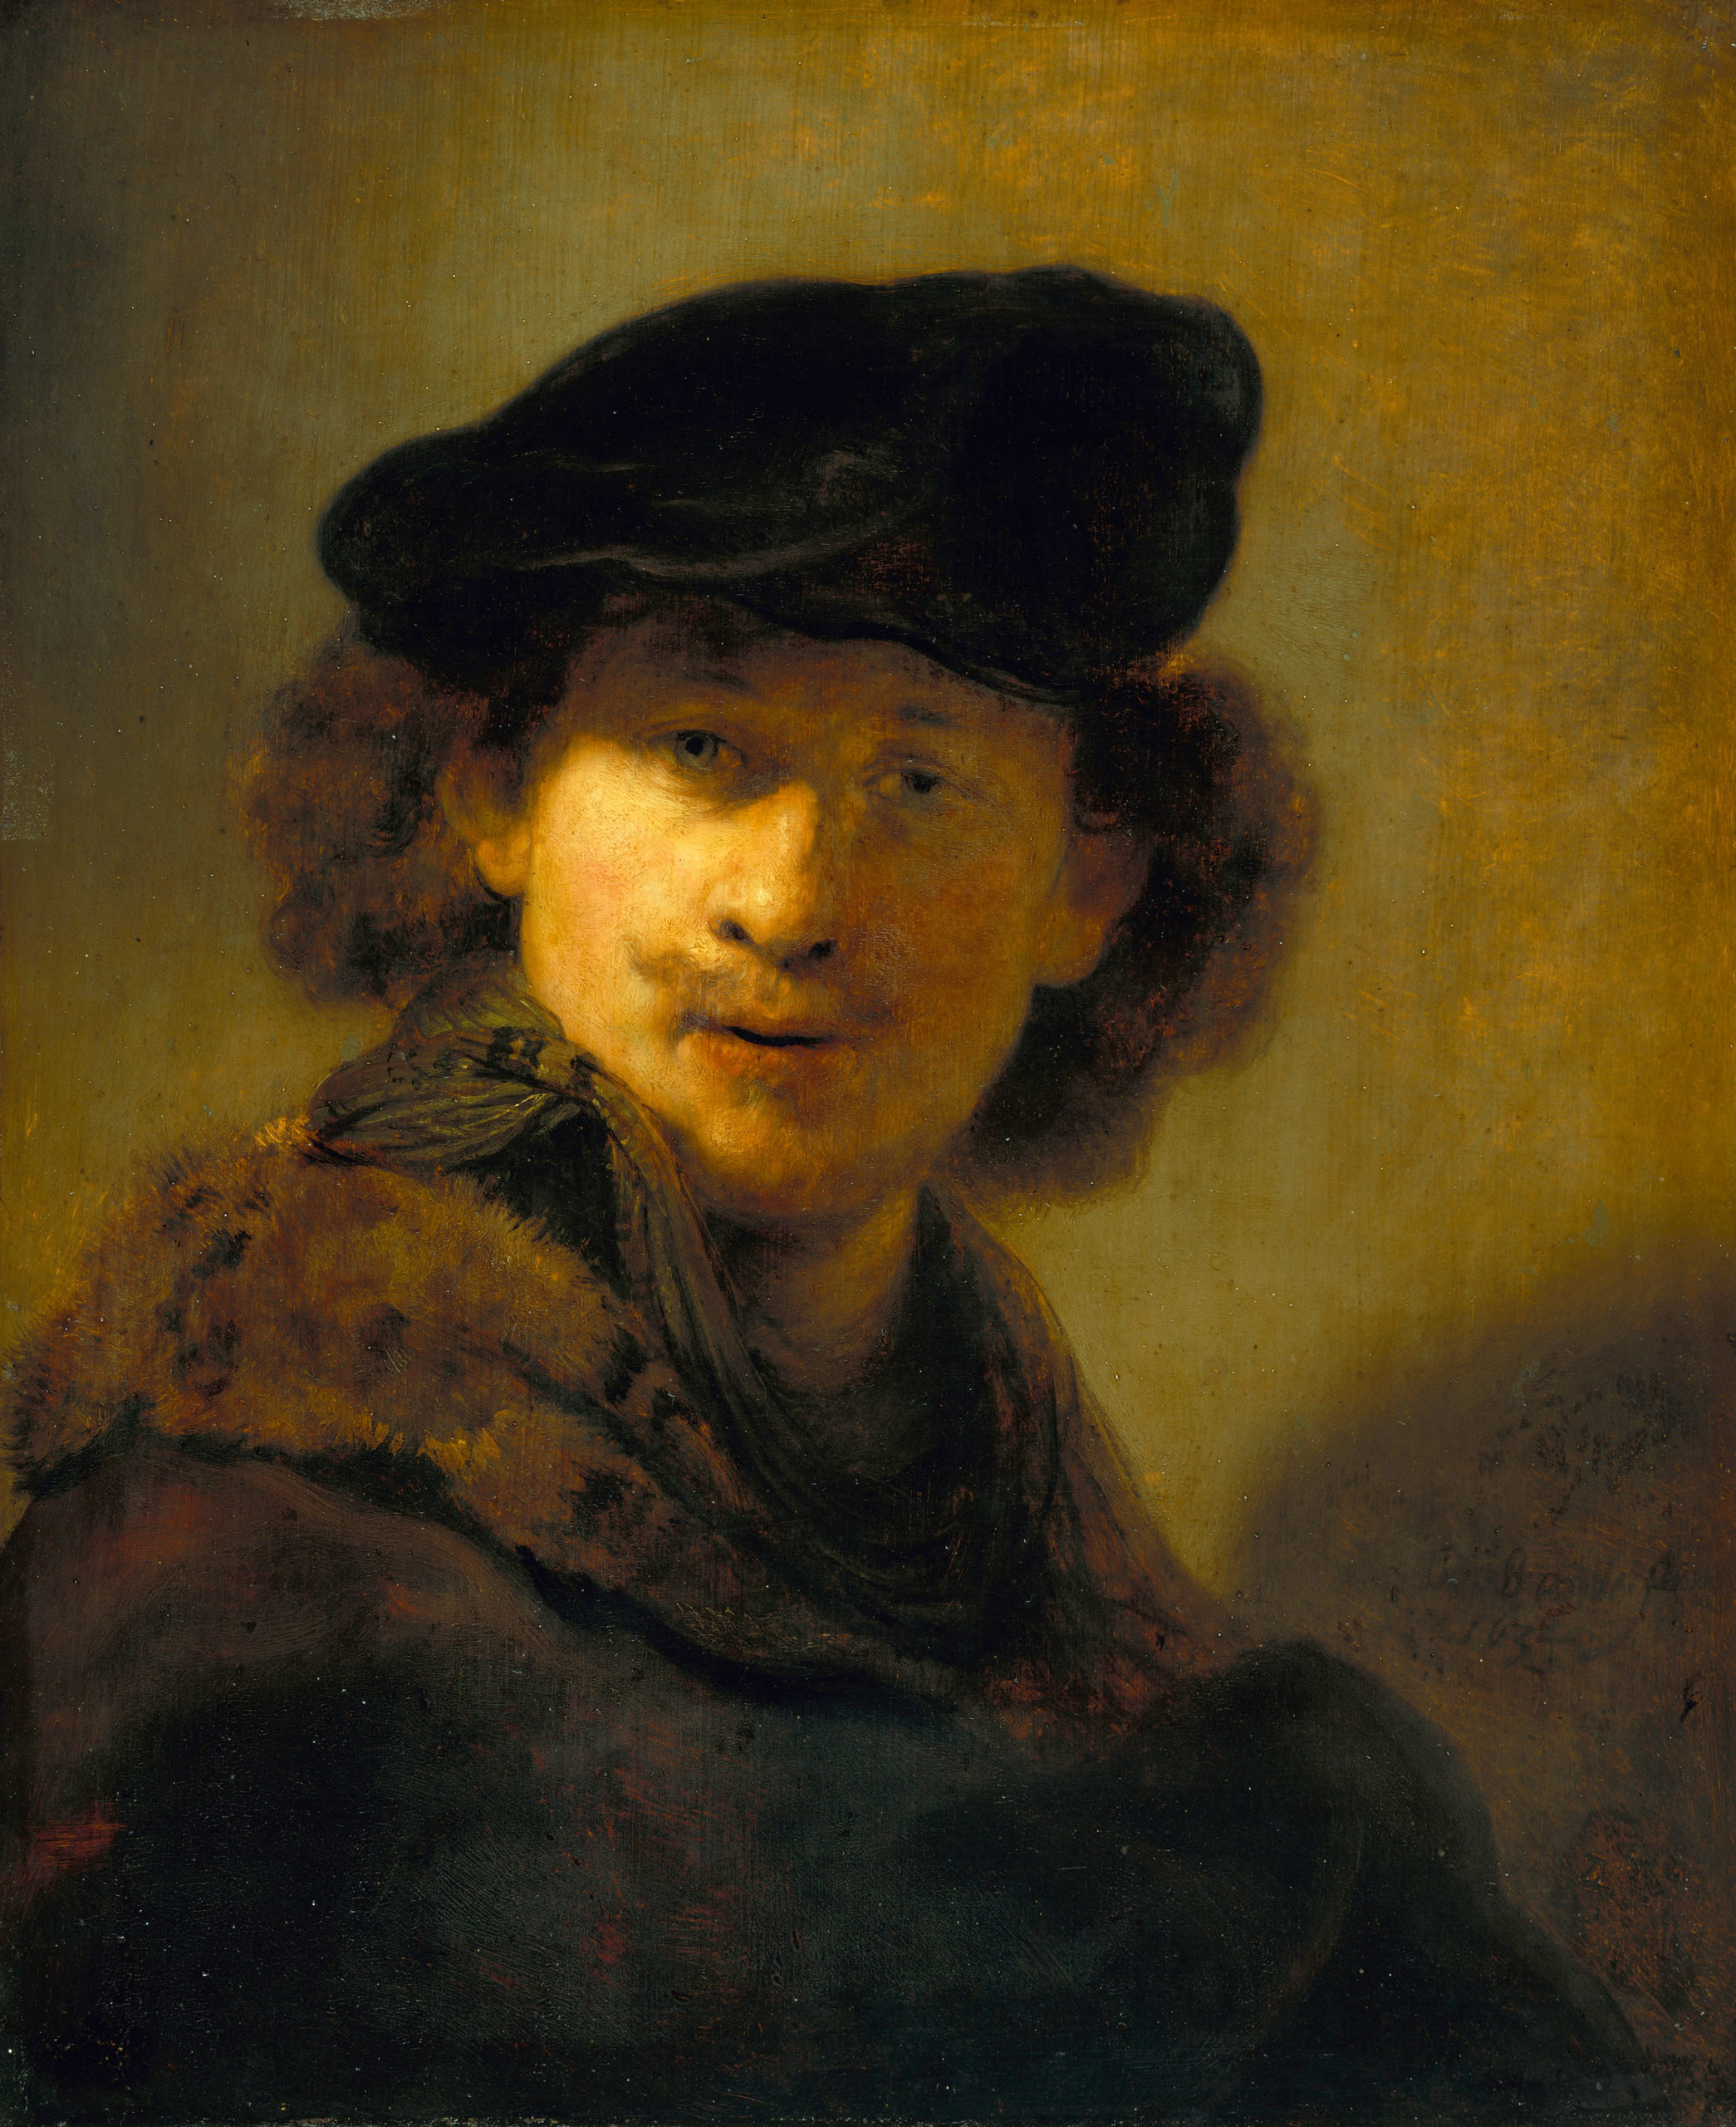 Painting like Rembrandt workshop